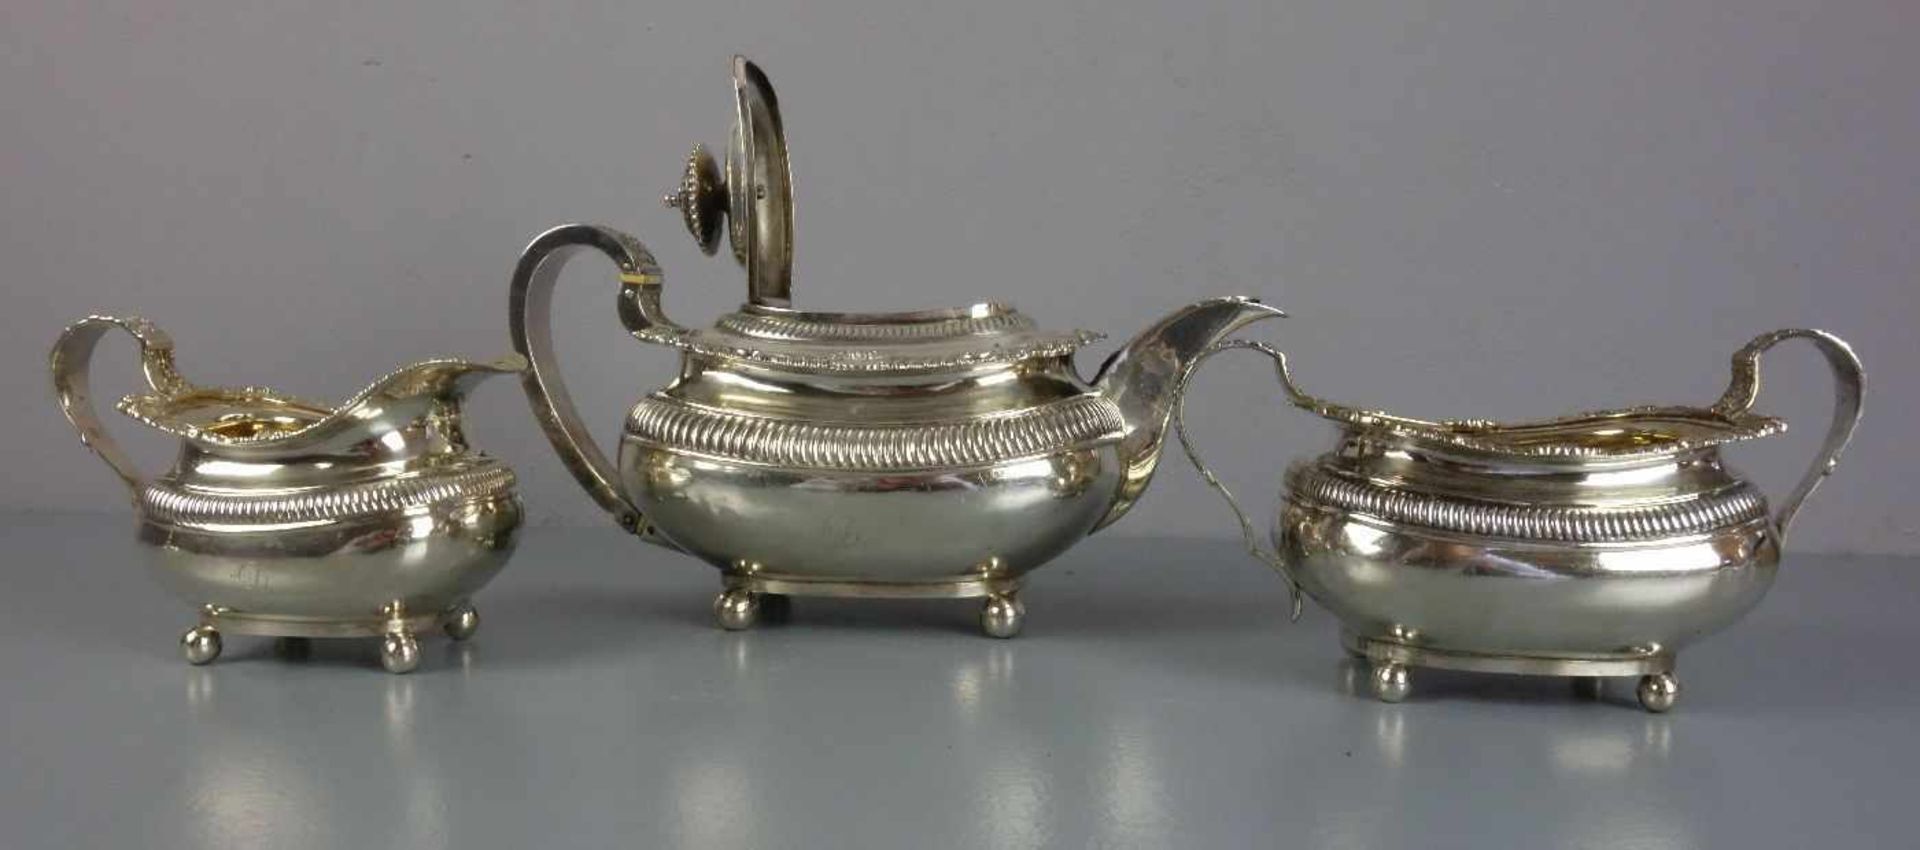 REGENCY TEEKERN - TEEKANNE, ZUCKERTOPF UND MILCHKANNE / teapot, sugar pot and milk pot, England, - Image 3 of 4